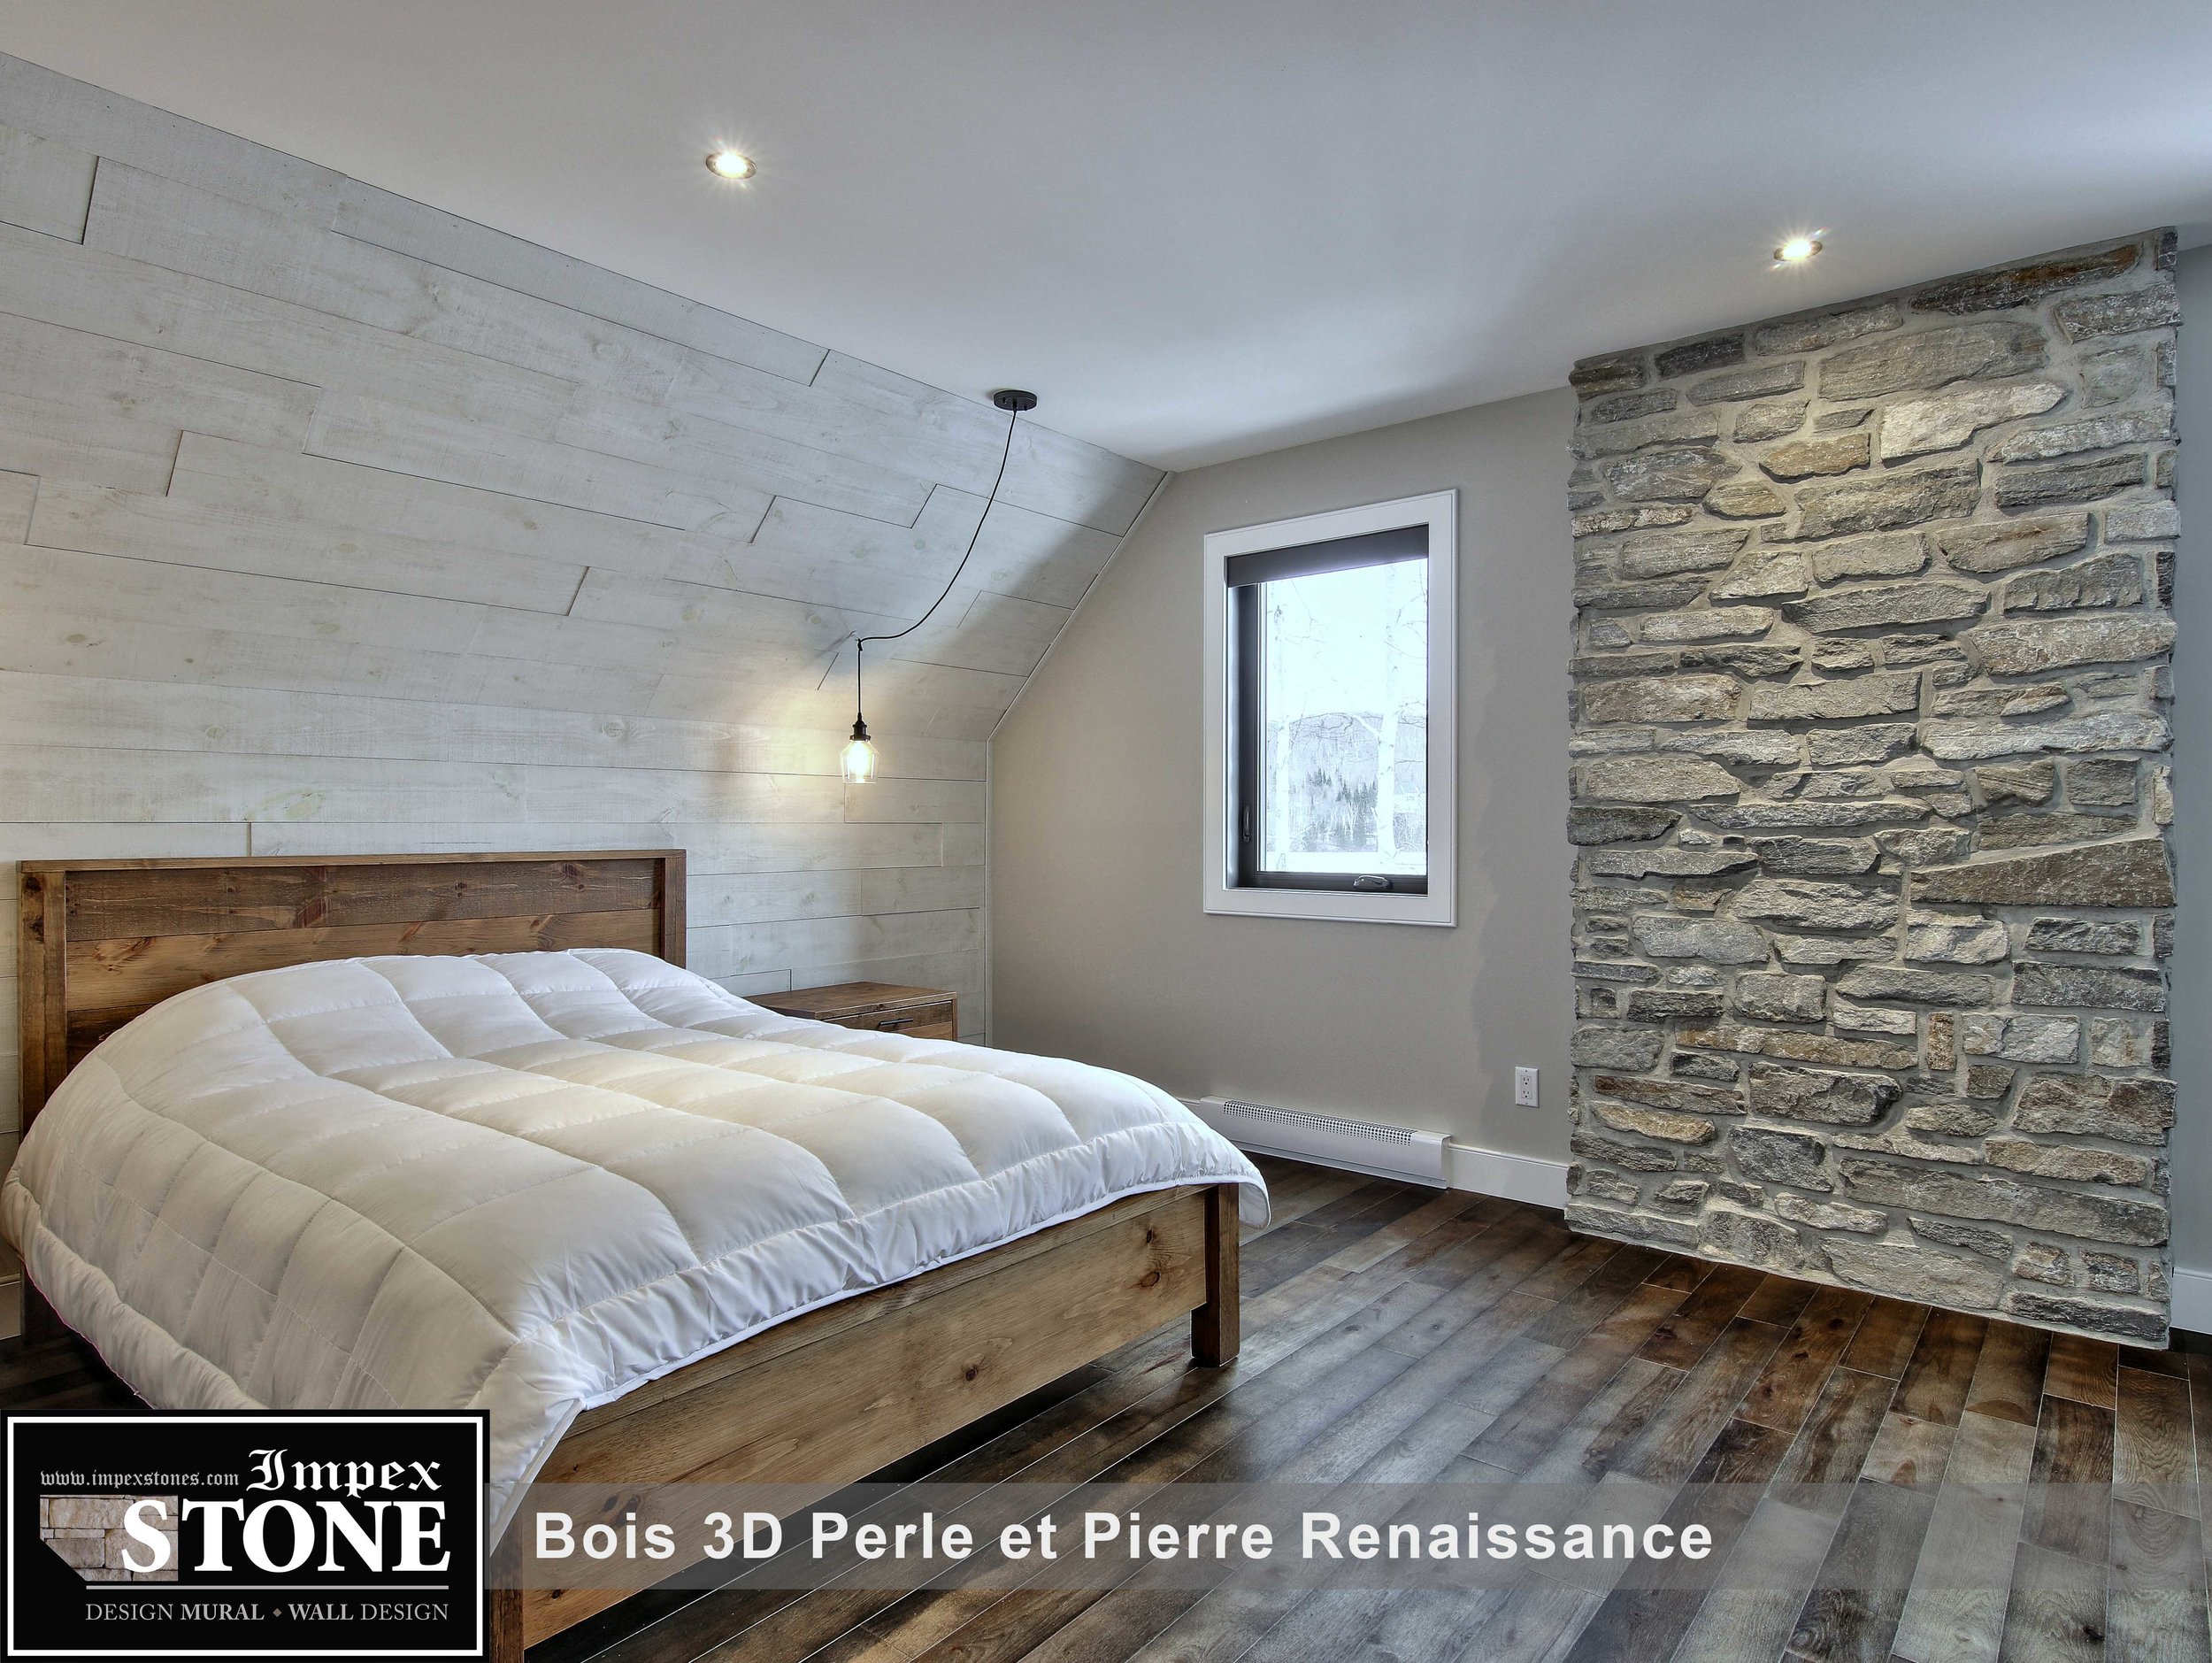 Perle-renaissance-bedroom-logo-web-eng.jpg